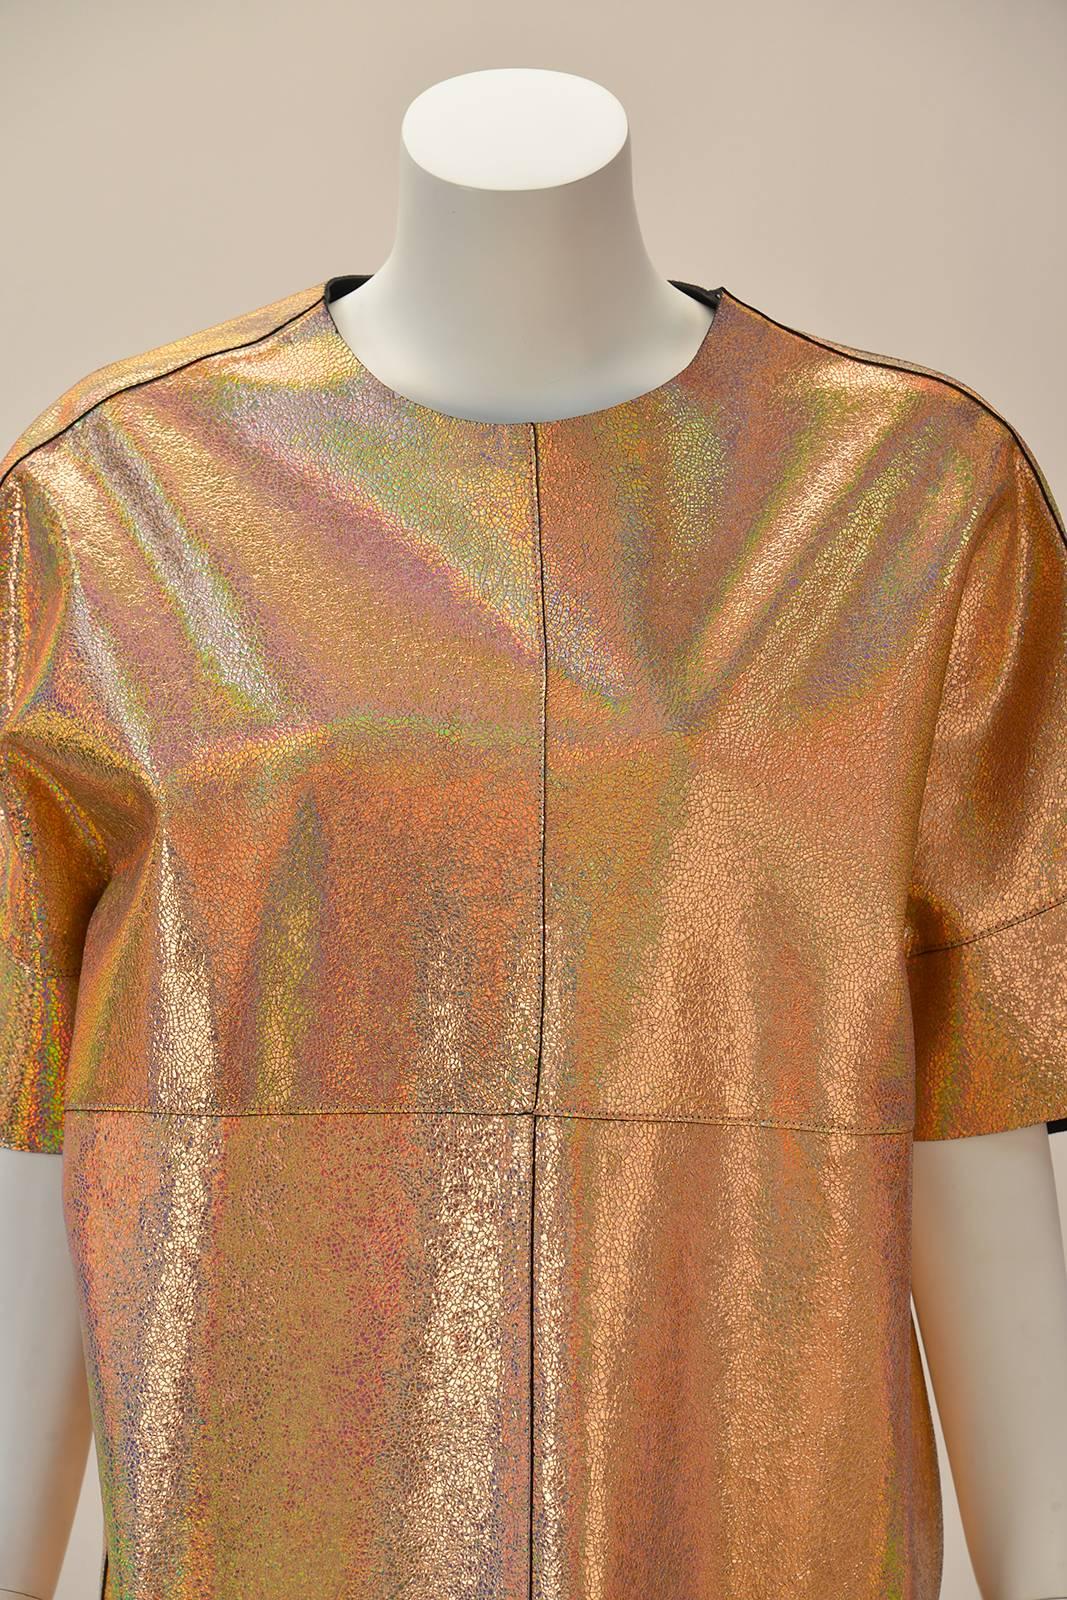 2014 Gucci Resort Collection Hologram Leather Shift Dress Large 1